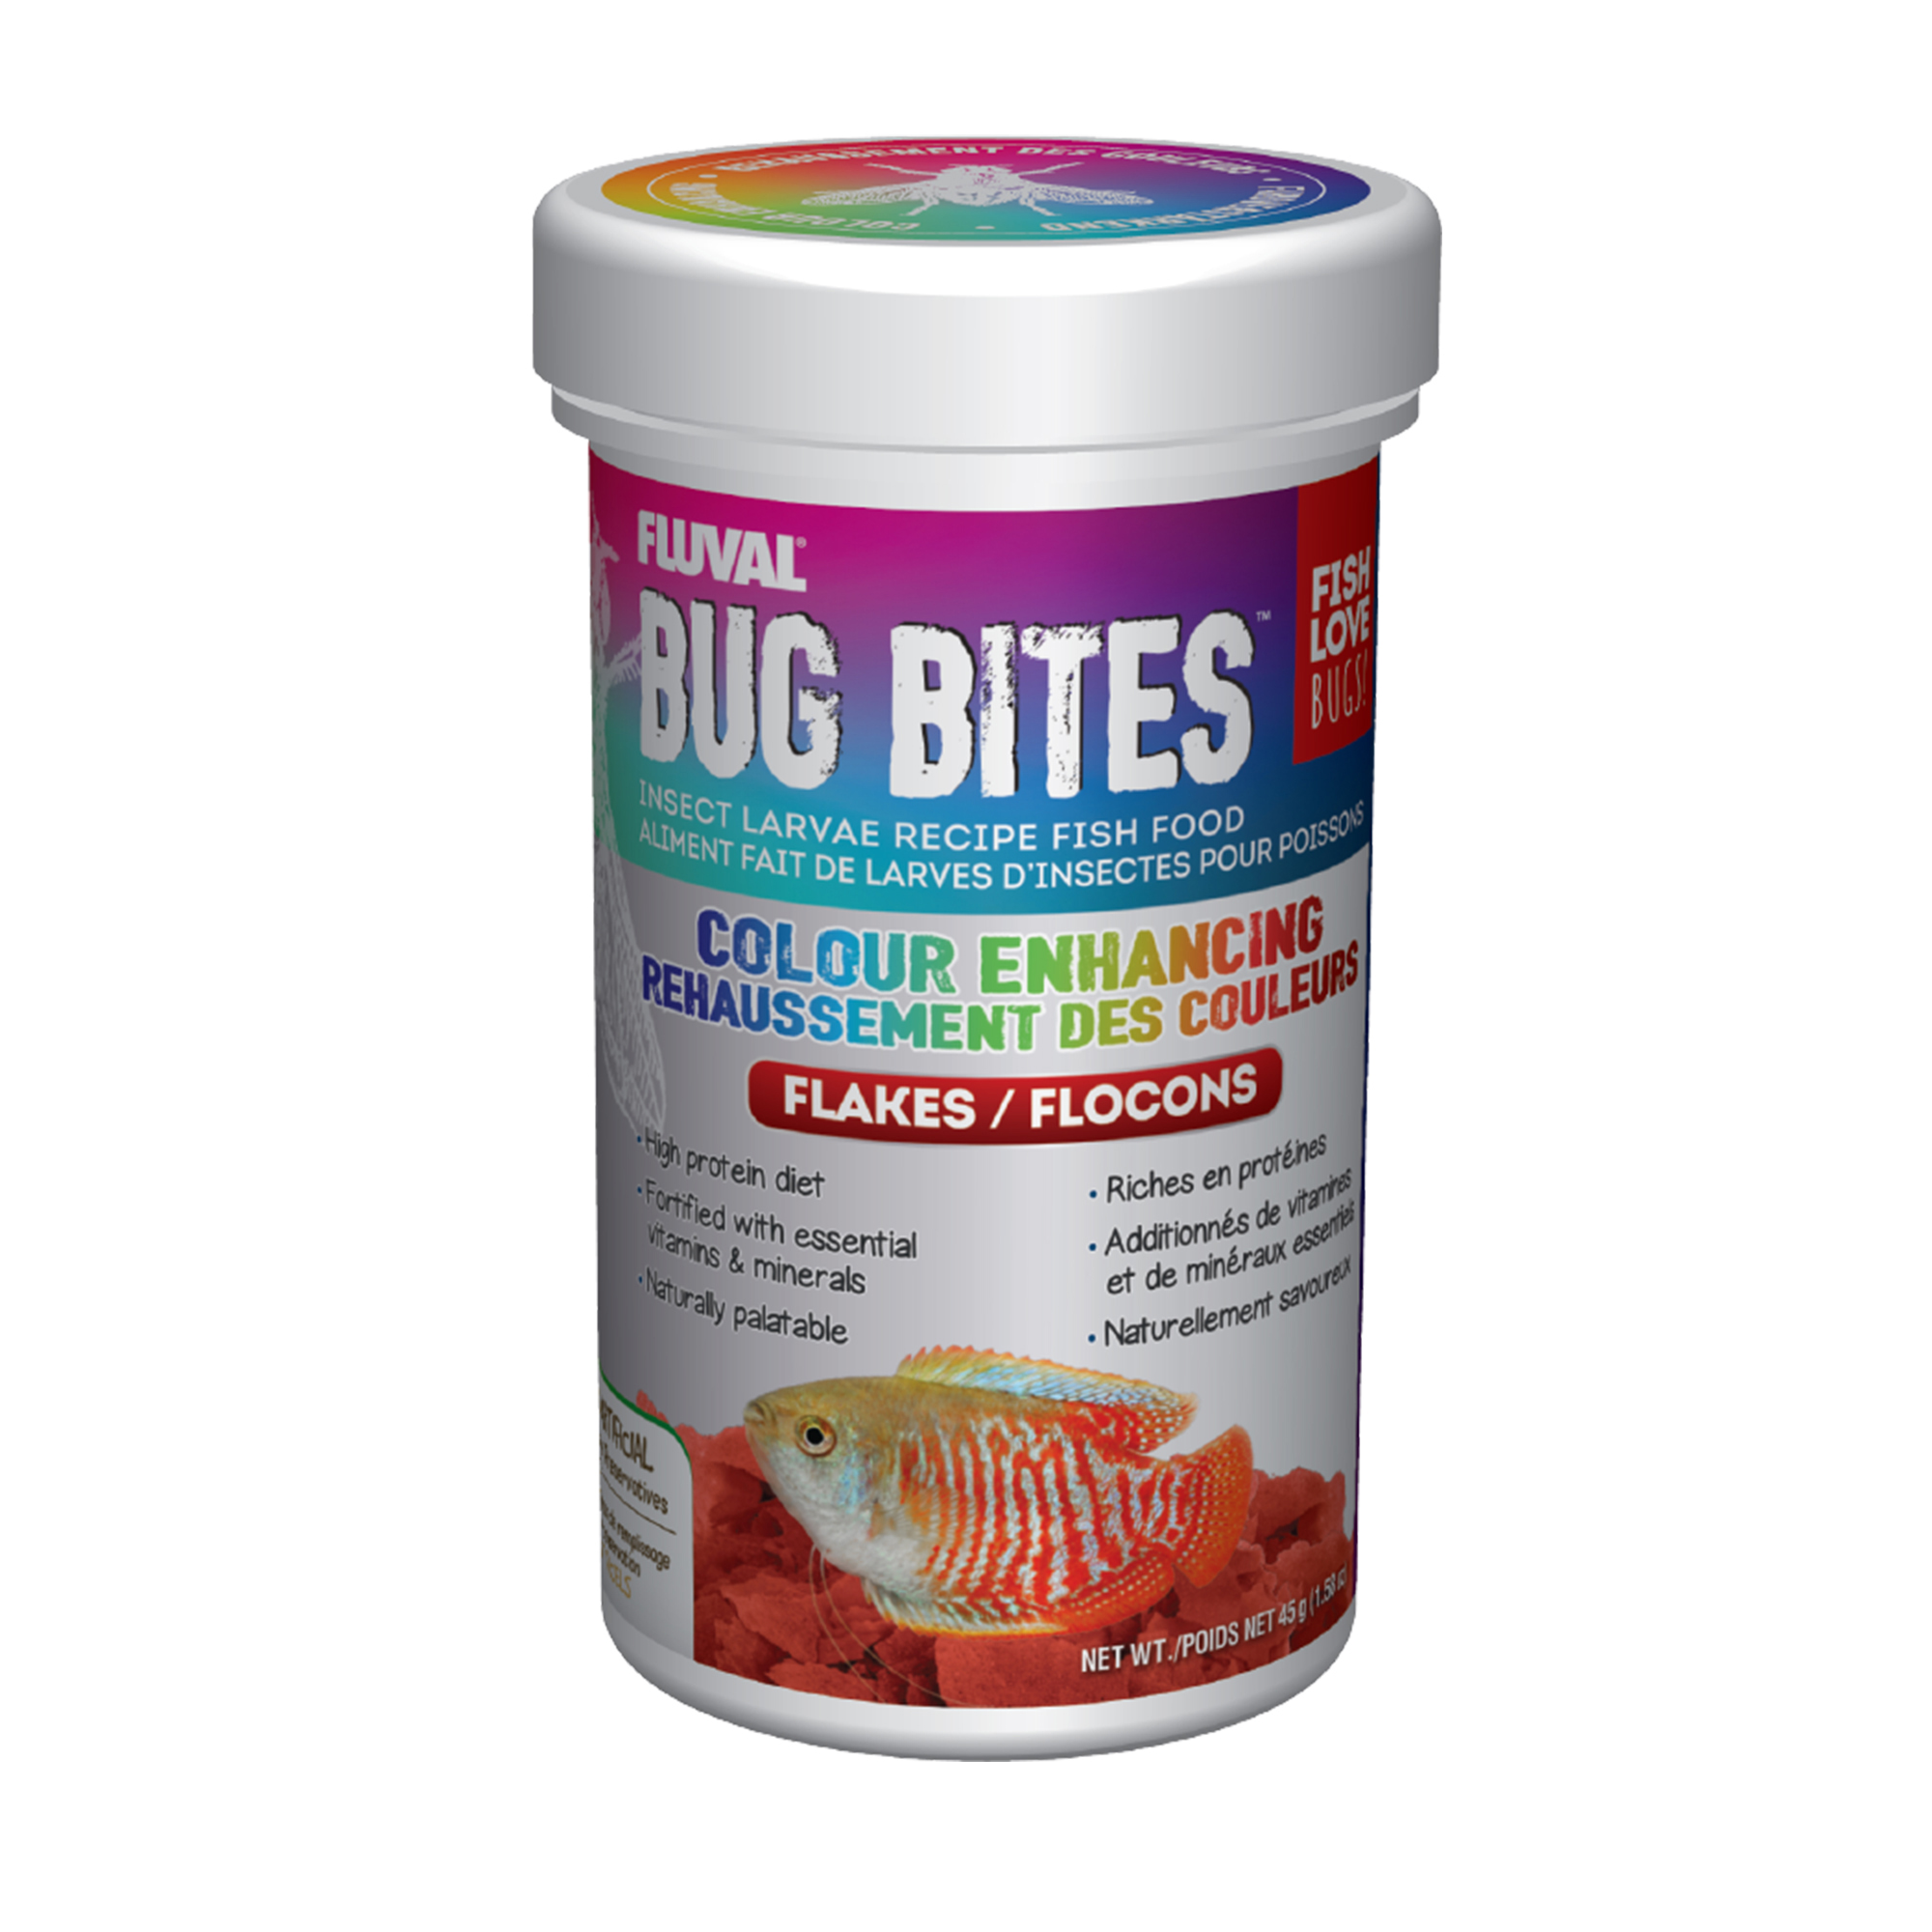 Fluval Bug Bites Color Flakes 1.58 oz.